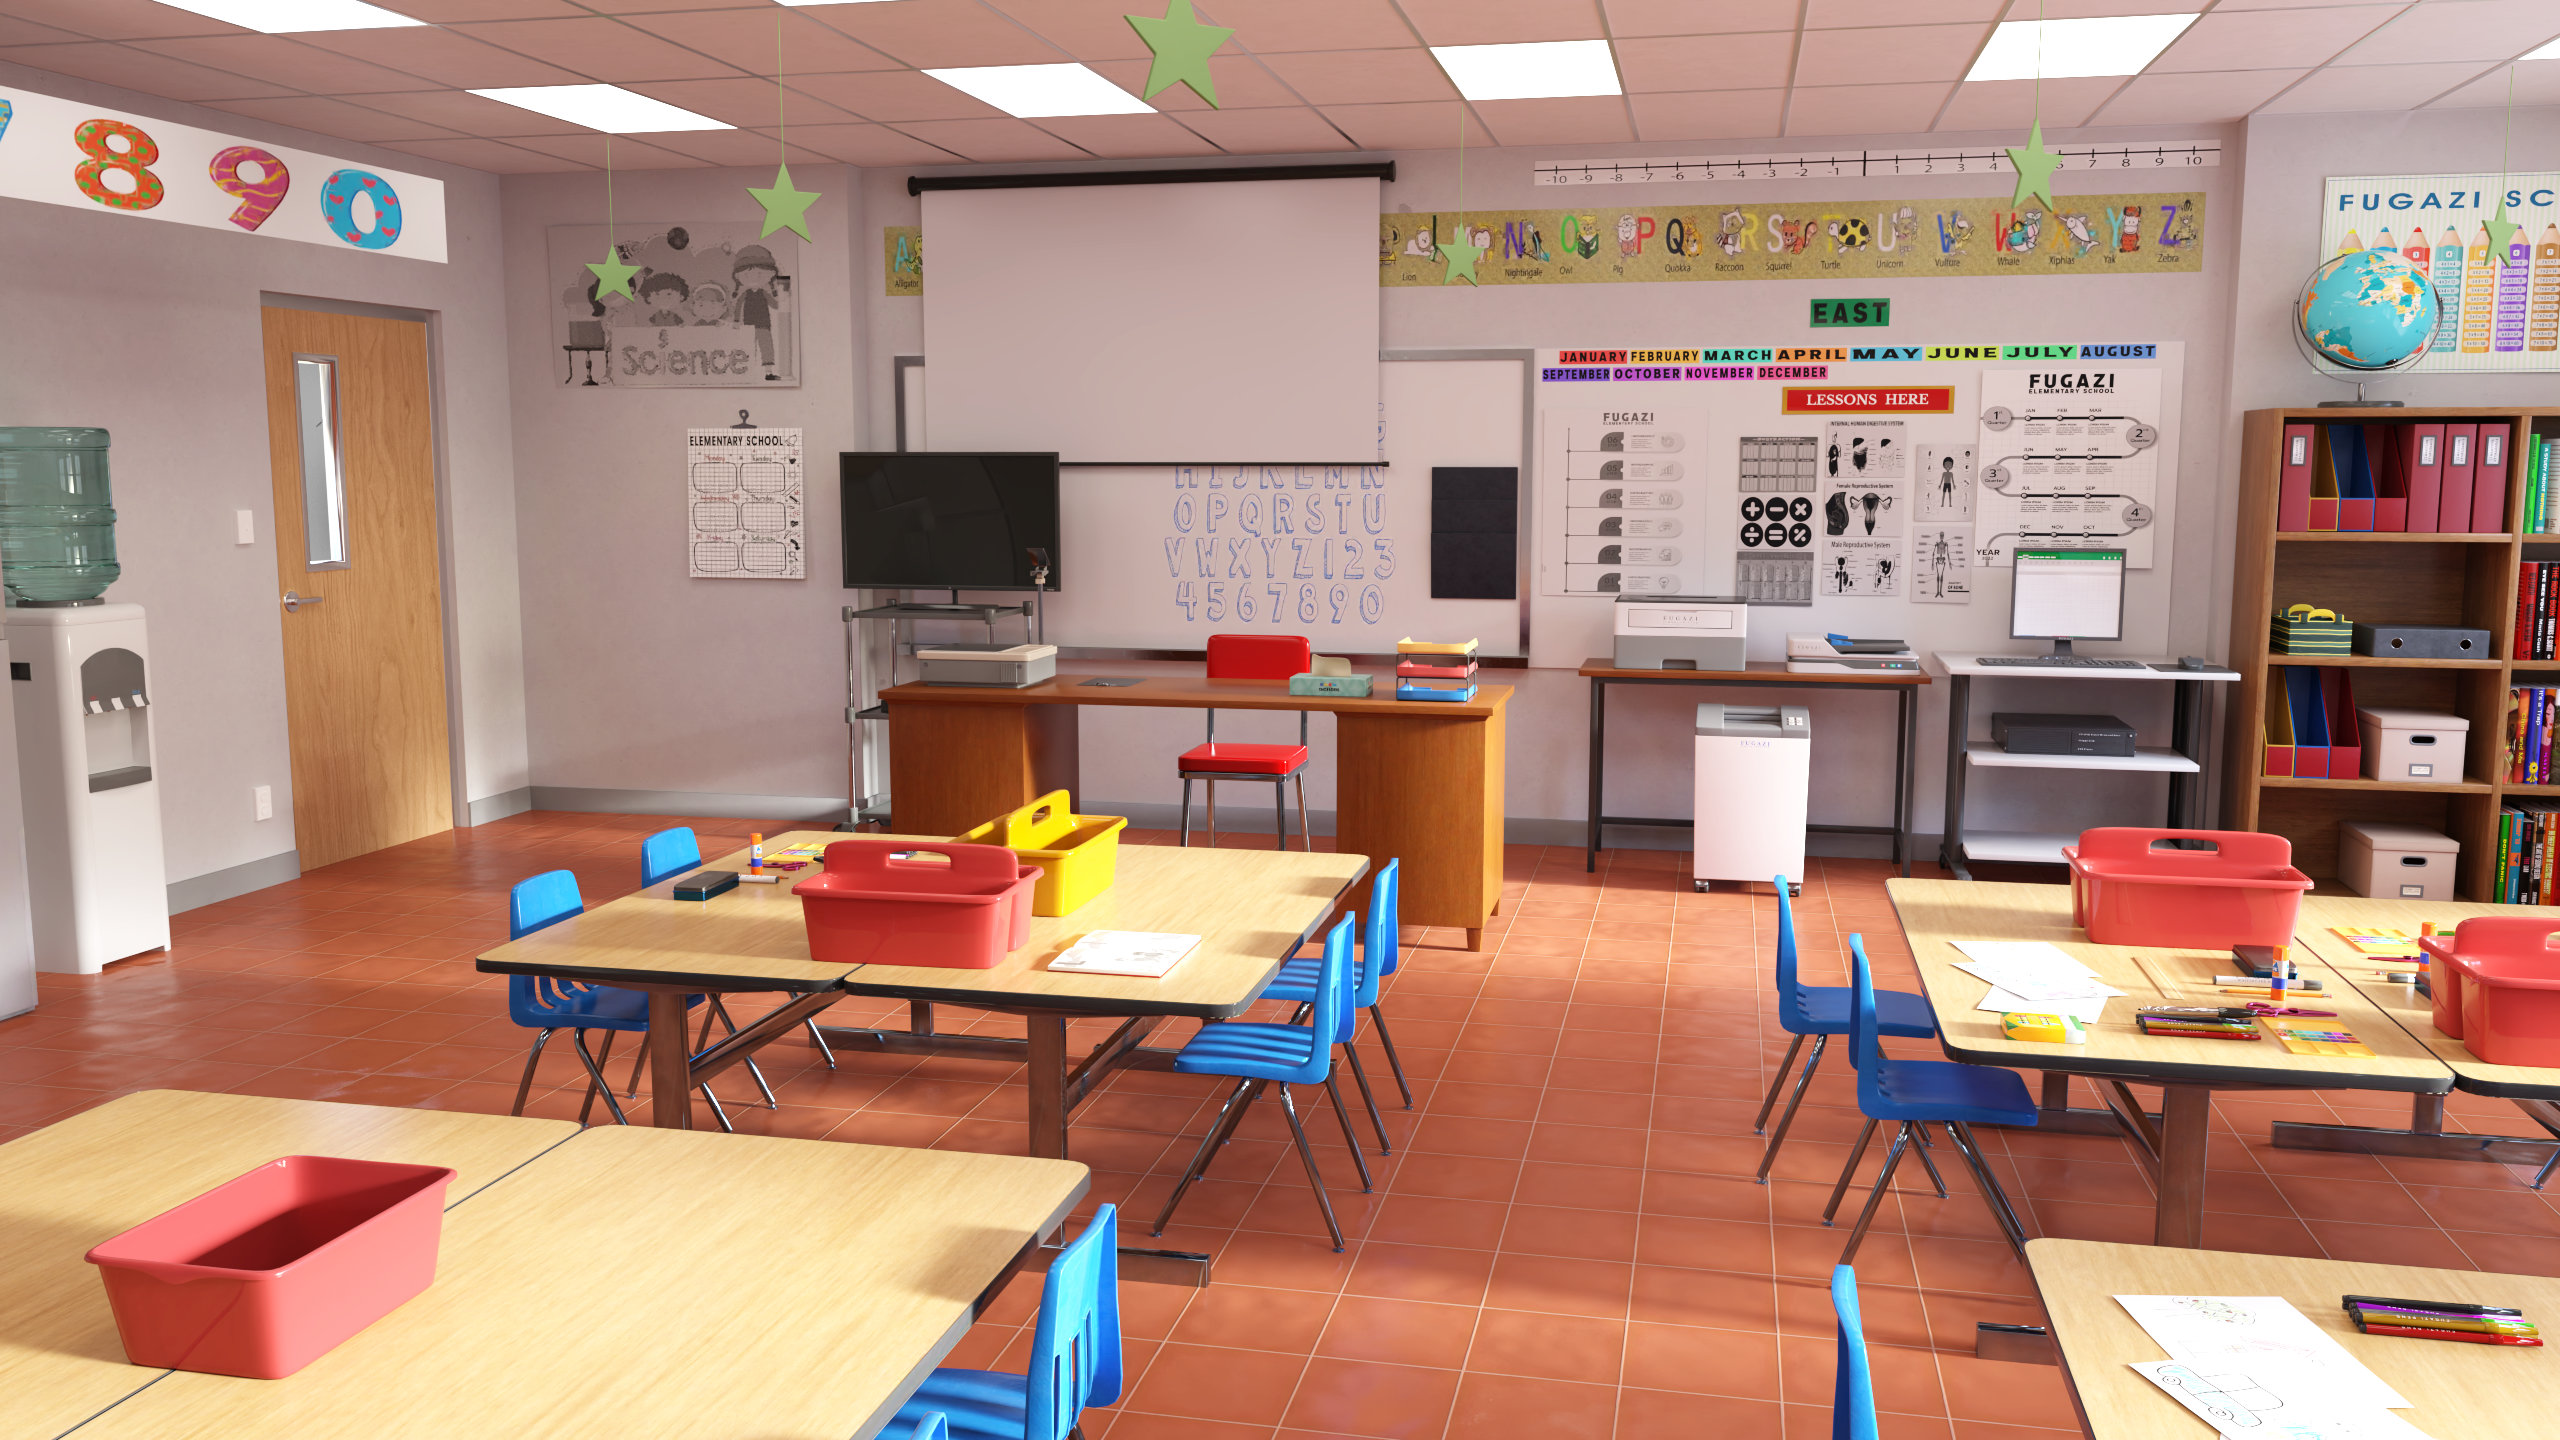 FG Elementary Classroom by: IronmanFugazi1968, 3D Models by Daz 3D